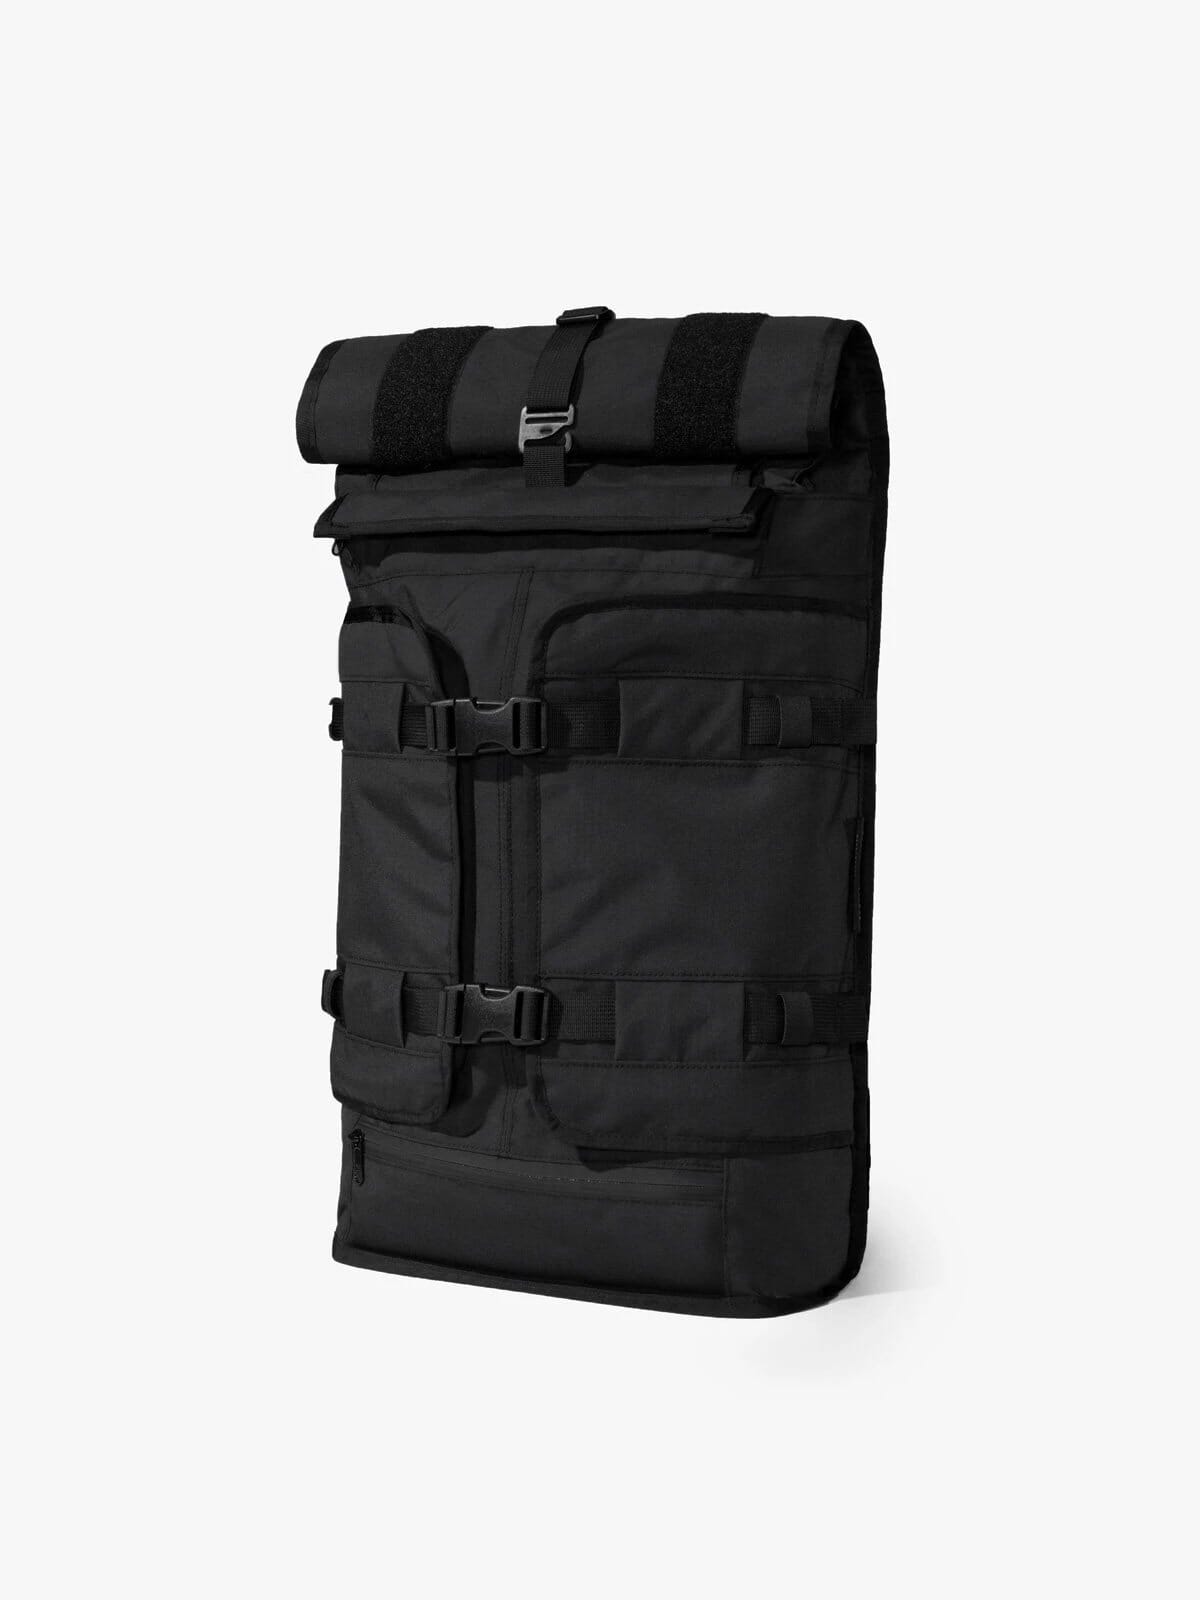 Rhake by Mission Workshop - Weatherproof Bags & Technical Apparel - San Francisco & Los Angeles - Built to endure - Guaranteed forever